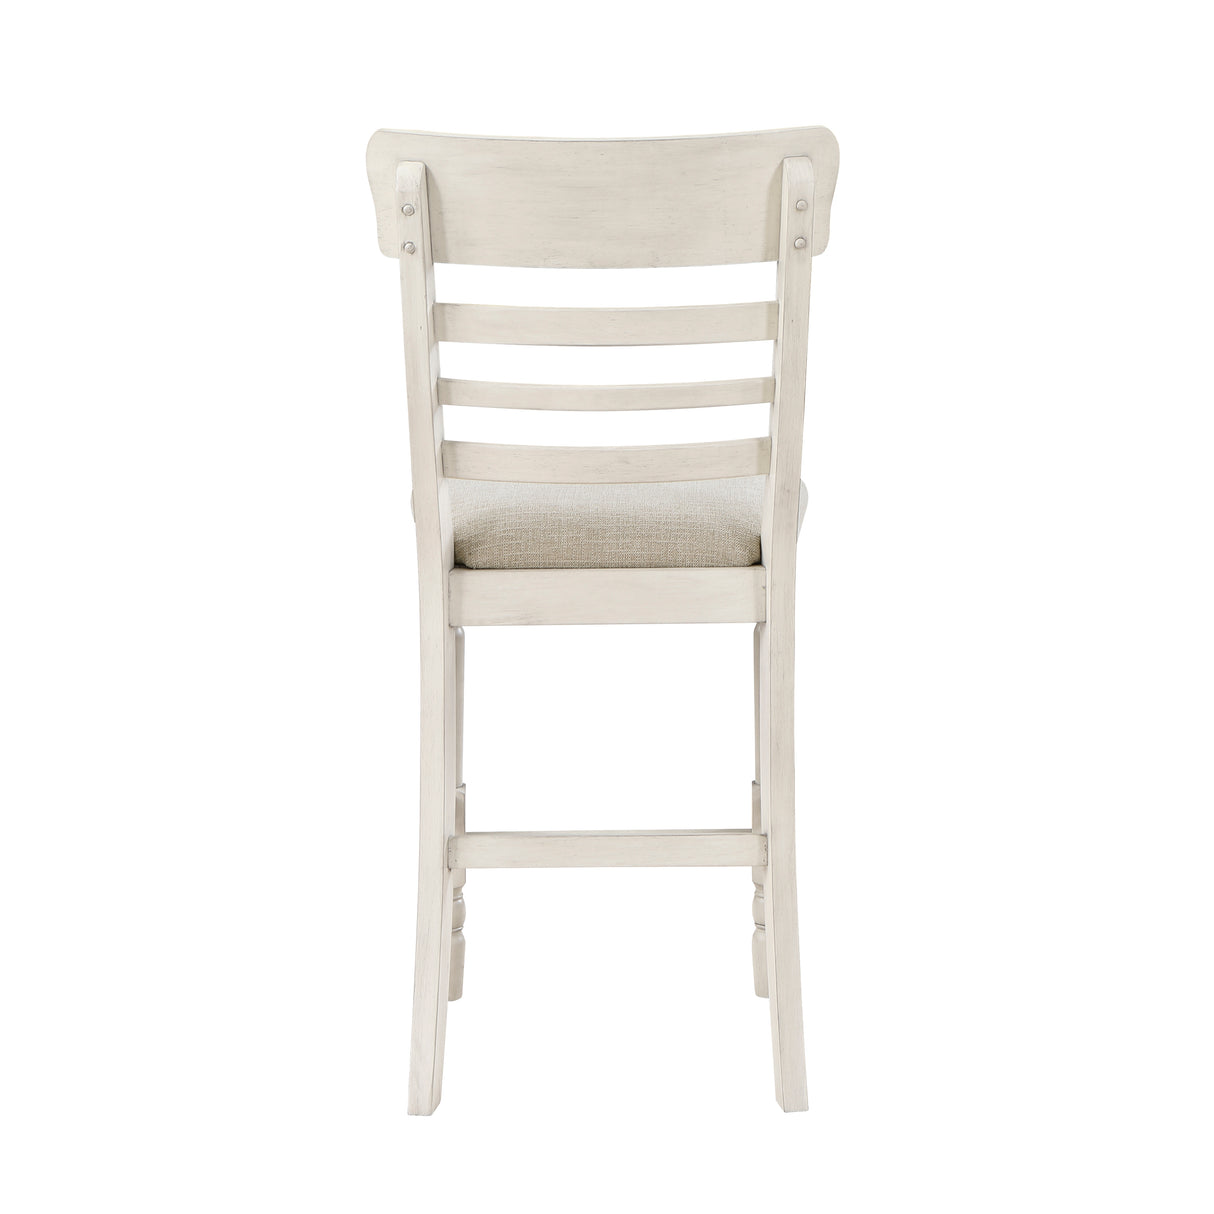 Alburgh White Counter Height Chair